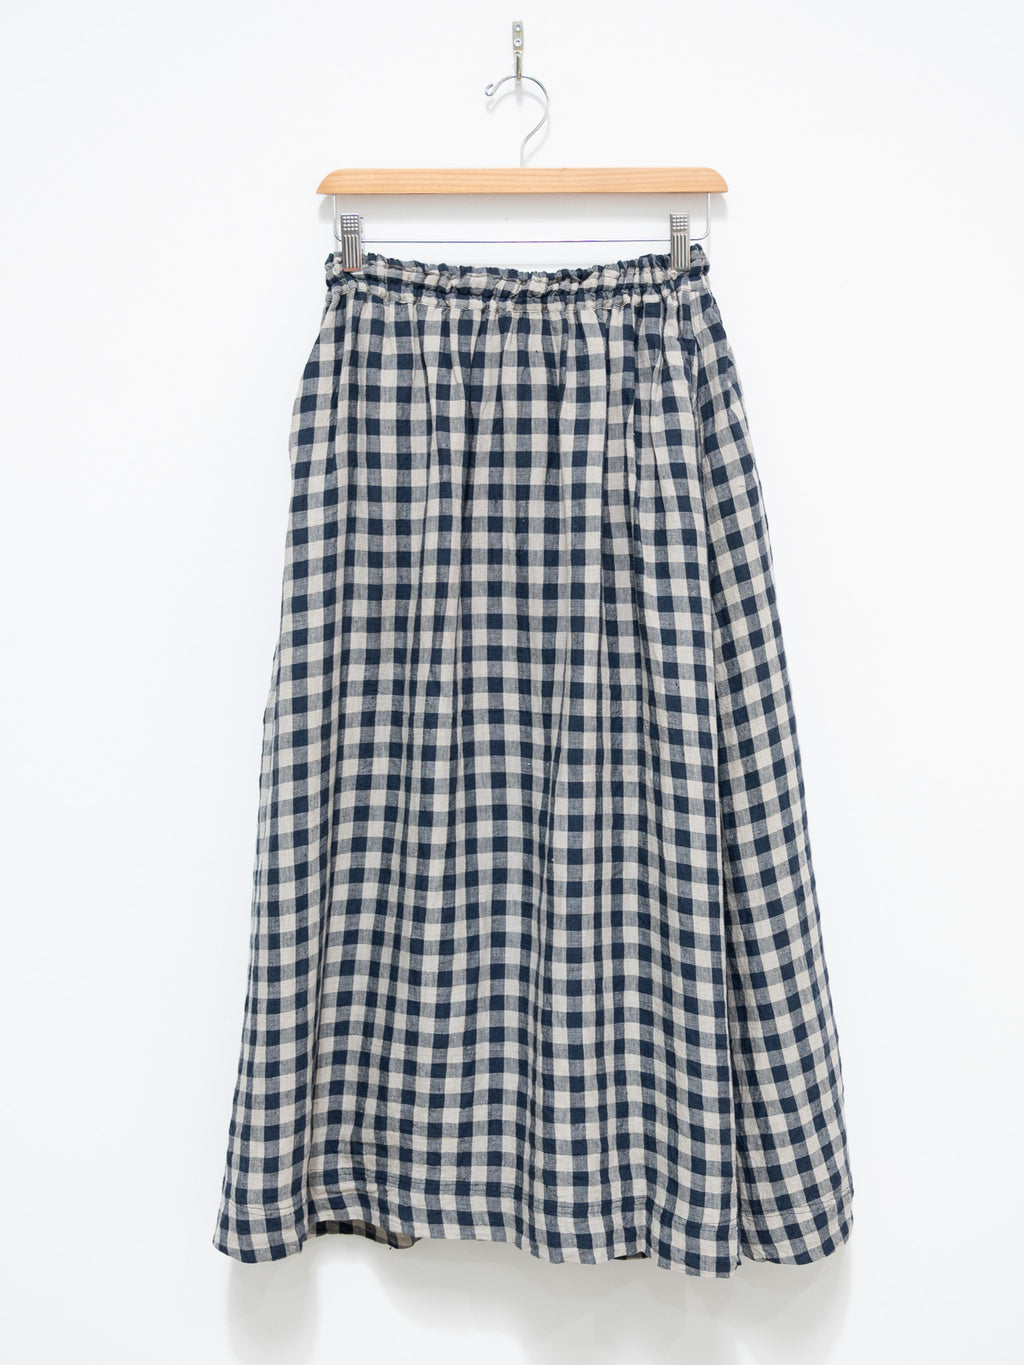 Namu Shop - Ichi Antiquites AZUMADAKI Linen Gingham Skirt - Beige x Navy